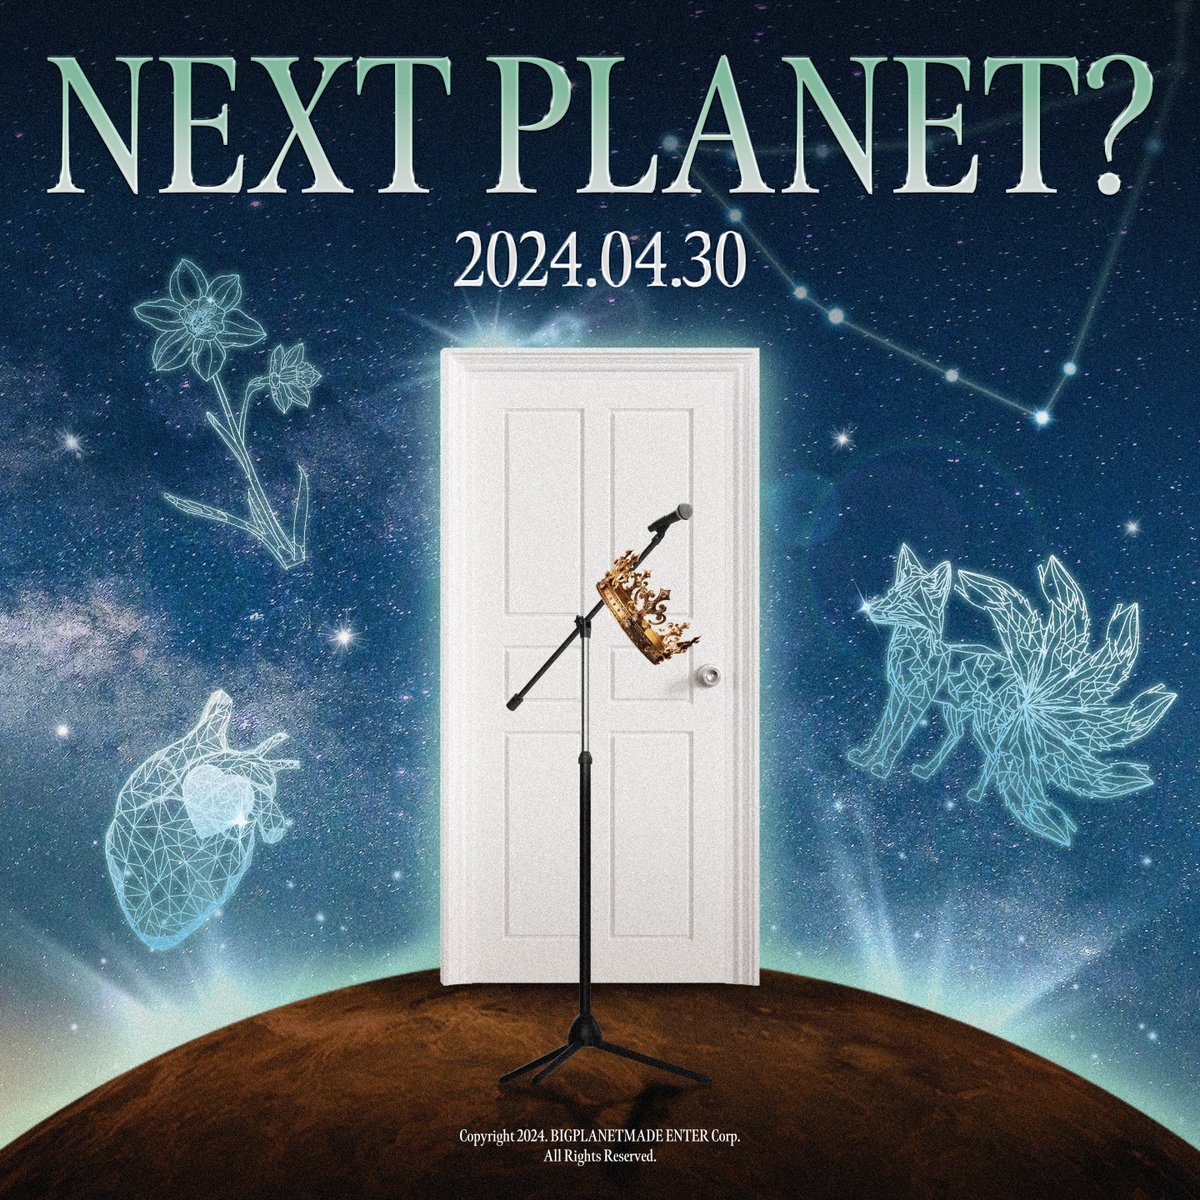 NEXT PLANET? 👔 2024.04.30(TUE) 12:00PM #BPM #BigPlanetMade